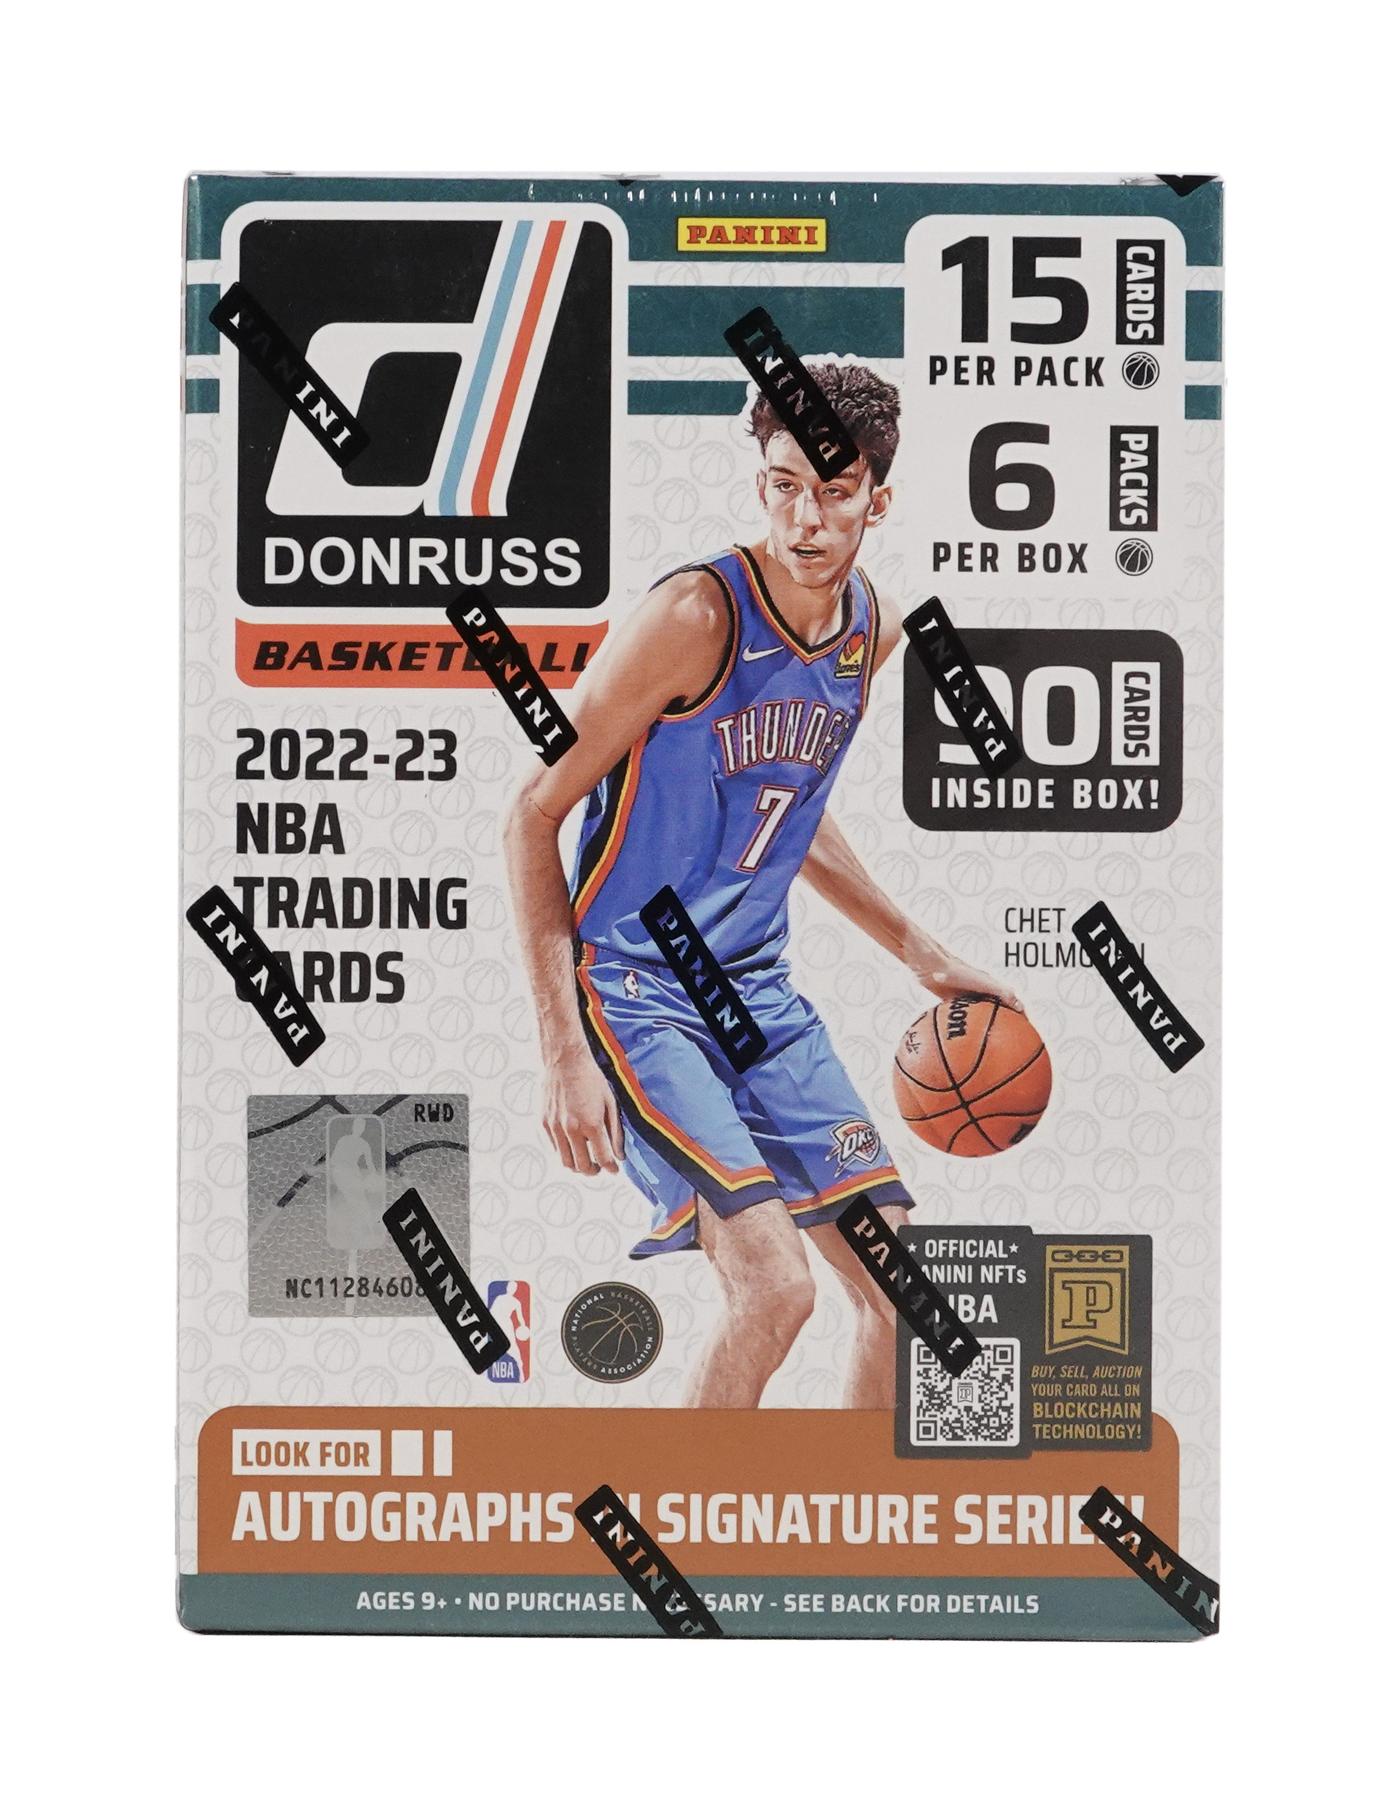  2020-21 Panini NBA Donruss Basketball Blaster Box - 11